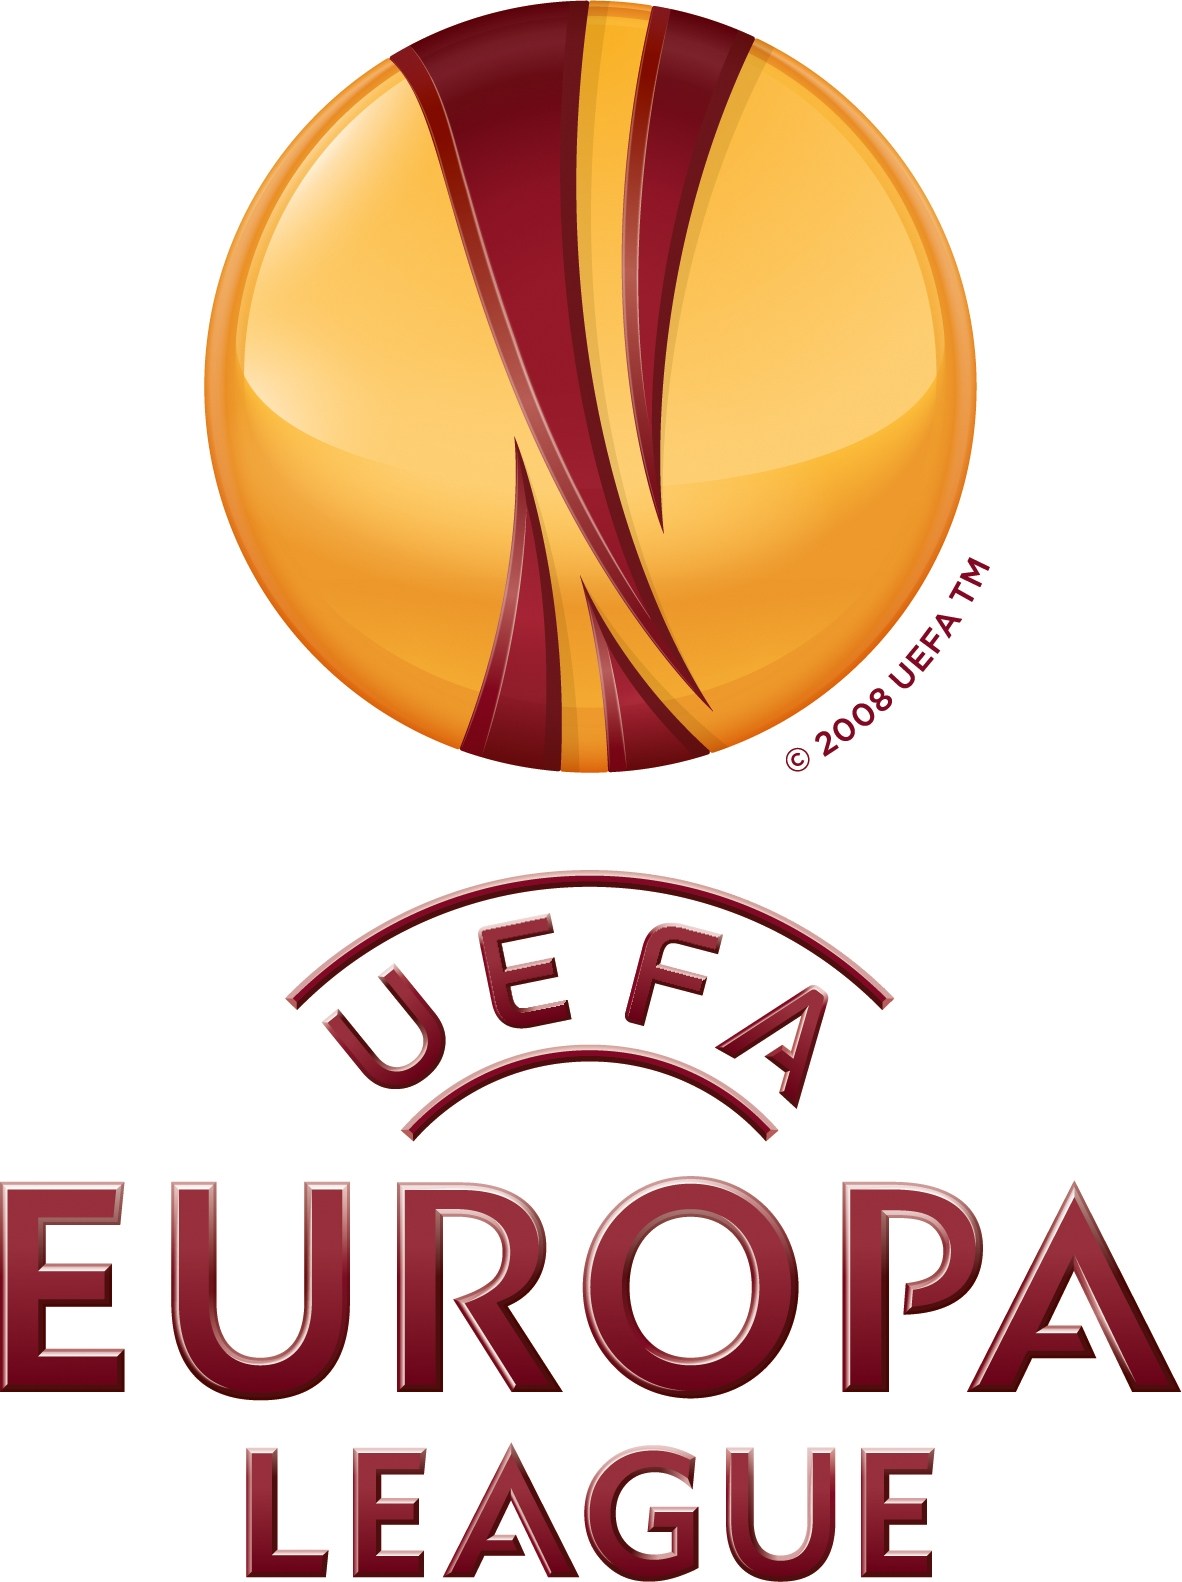 Uefa champions league font free download